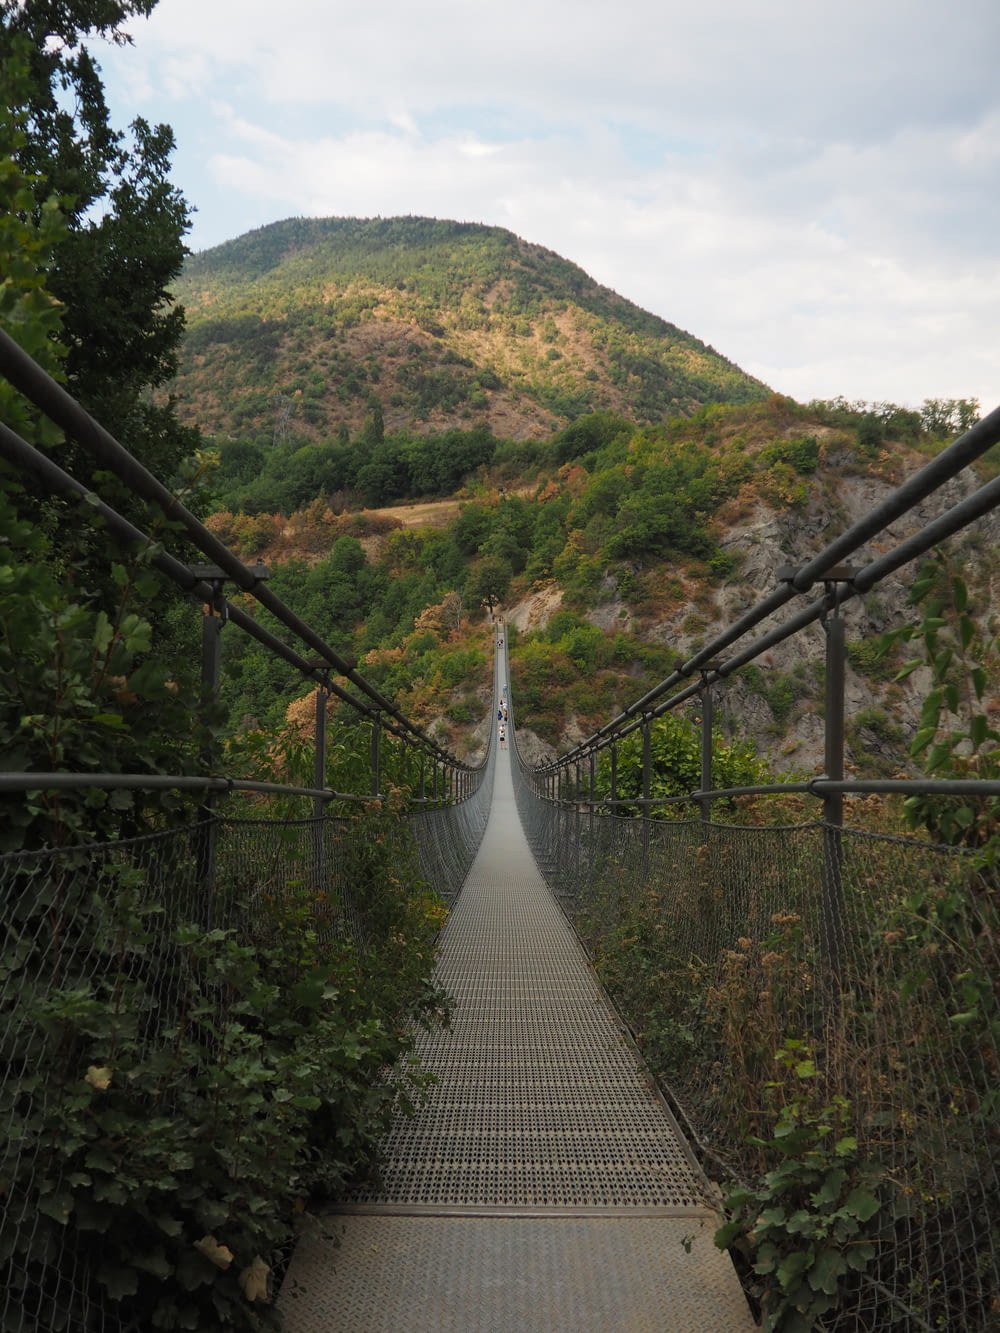 a long suspension bridge over a river